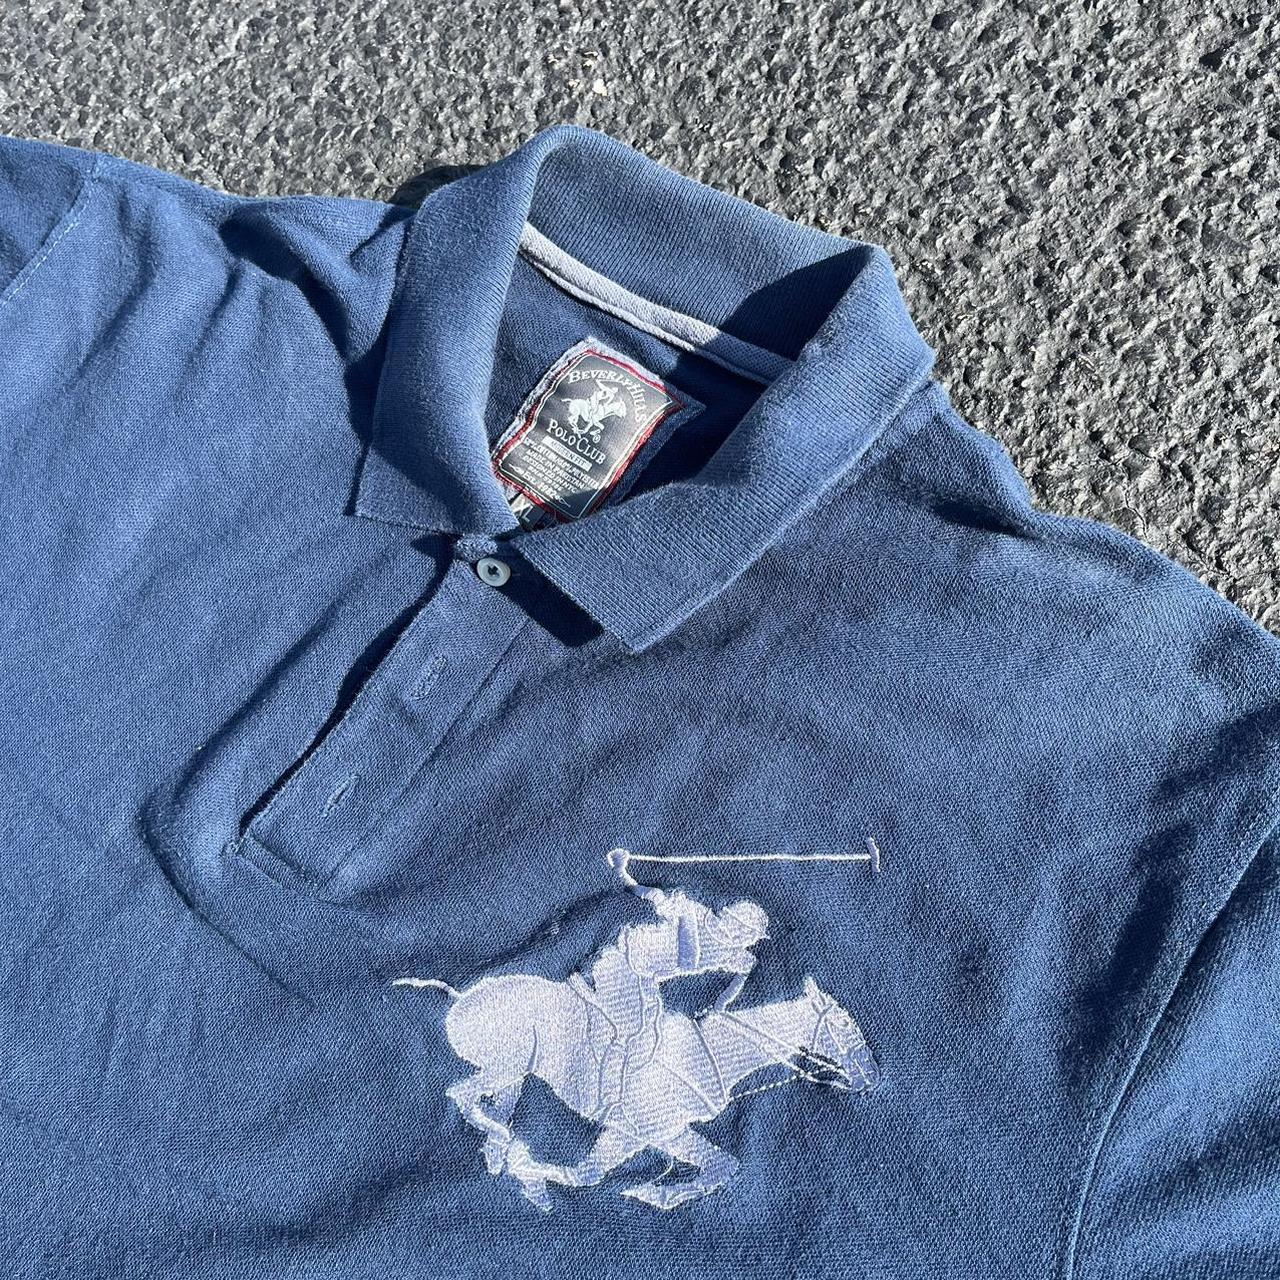 Ralph Lauren Polo Club Grey T-Shirt